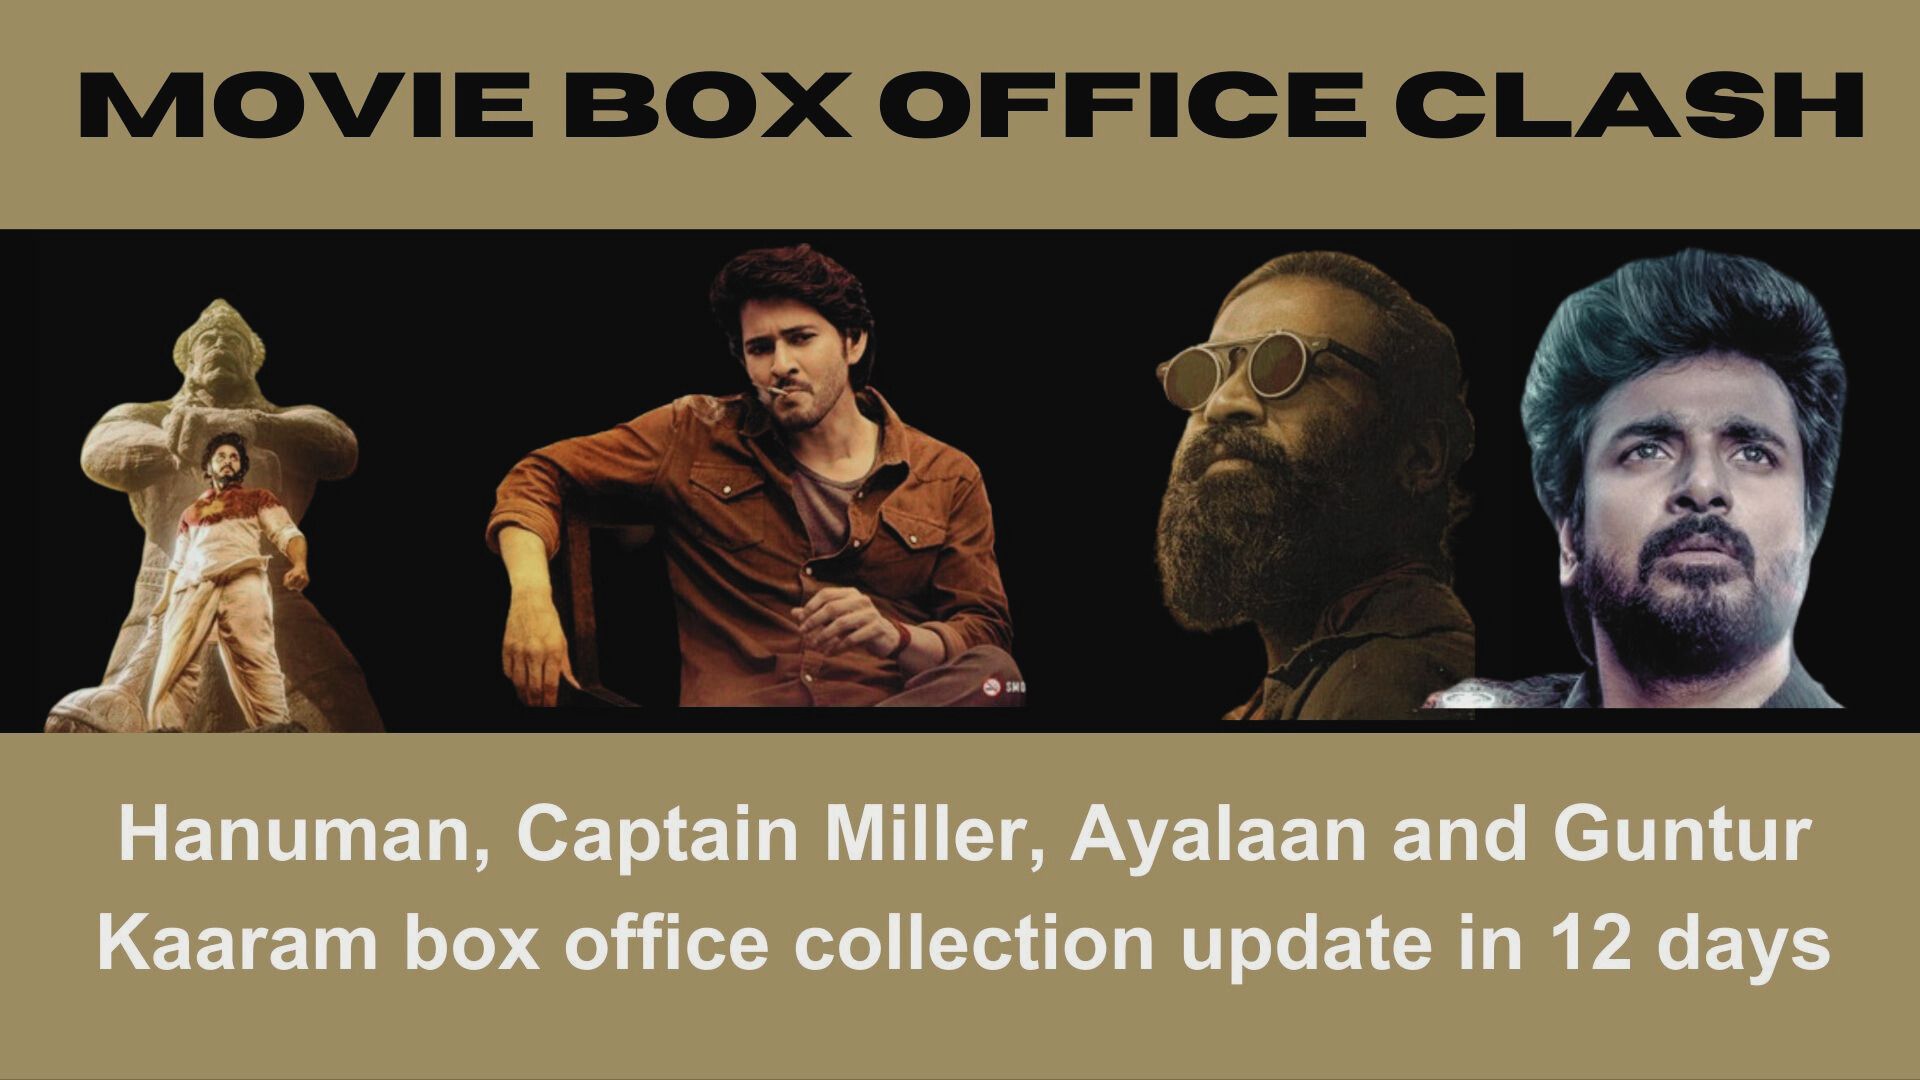 Movie Box Office Clash update: Hanuman, Captain Miller, Ayalaan and Guntur Kaaram box office collection update in 12 days